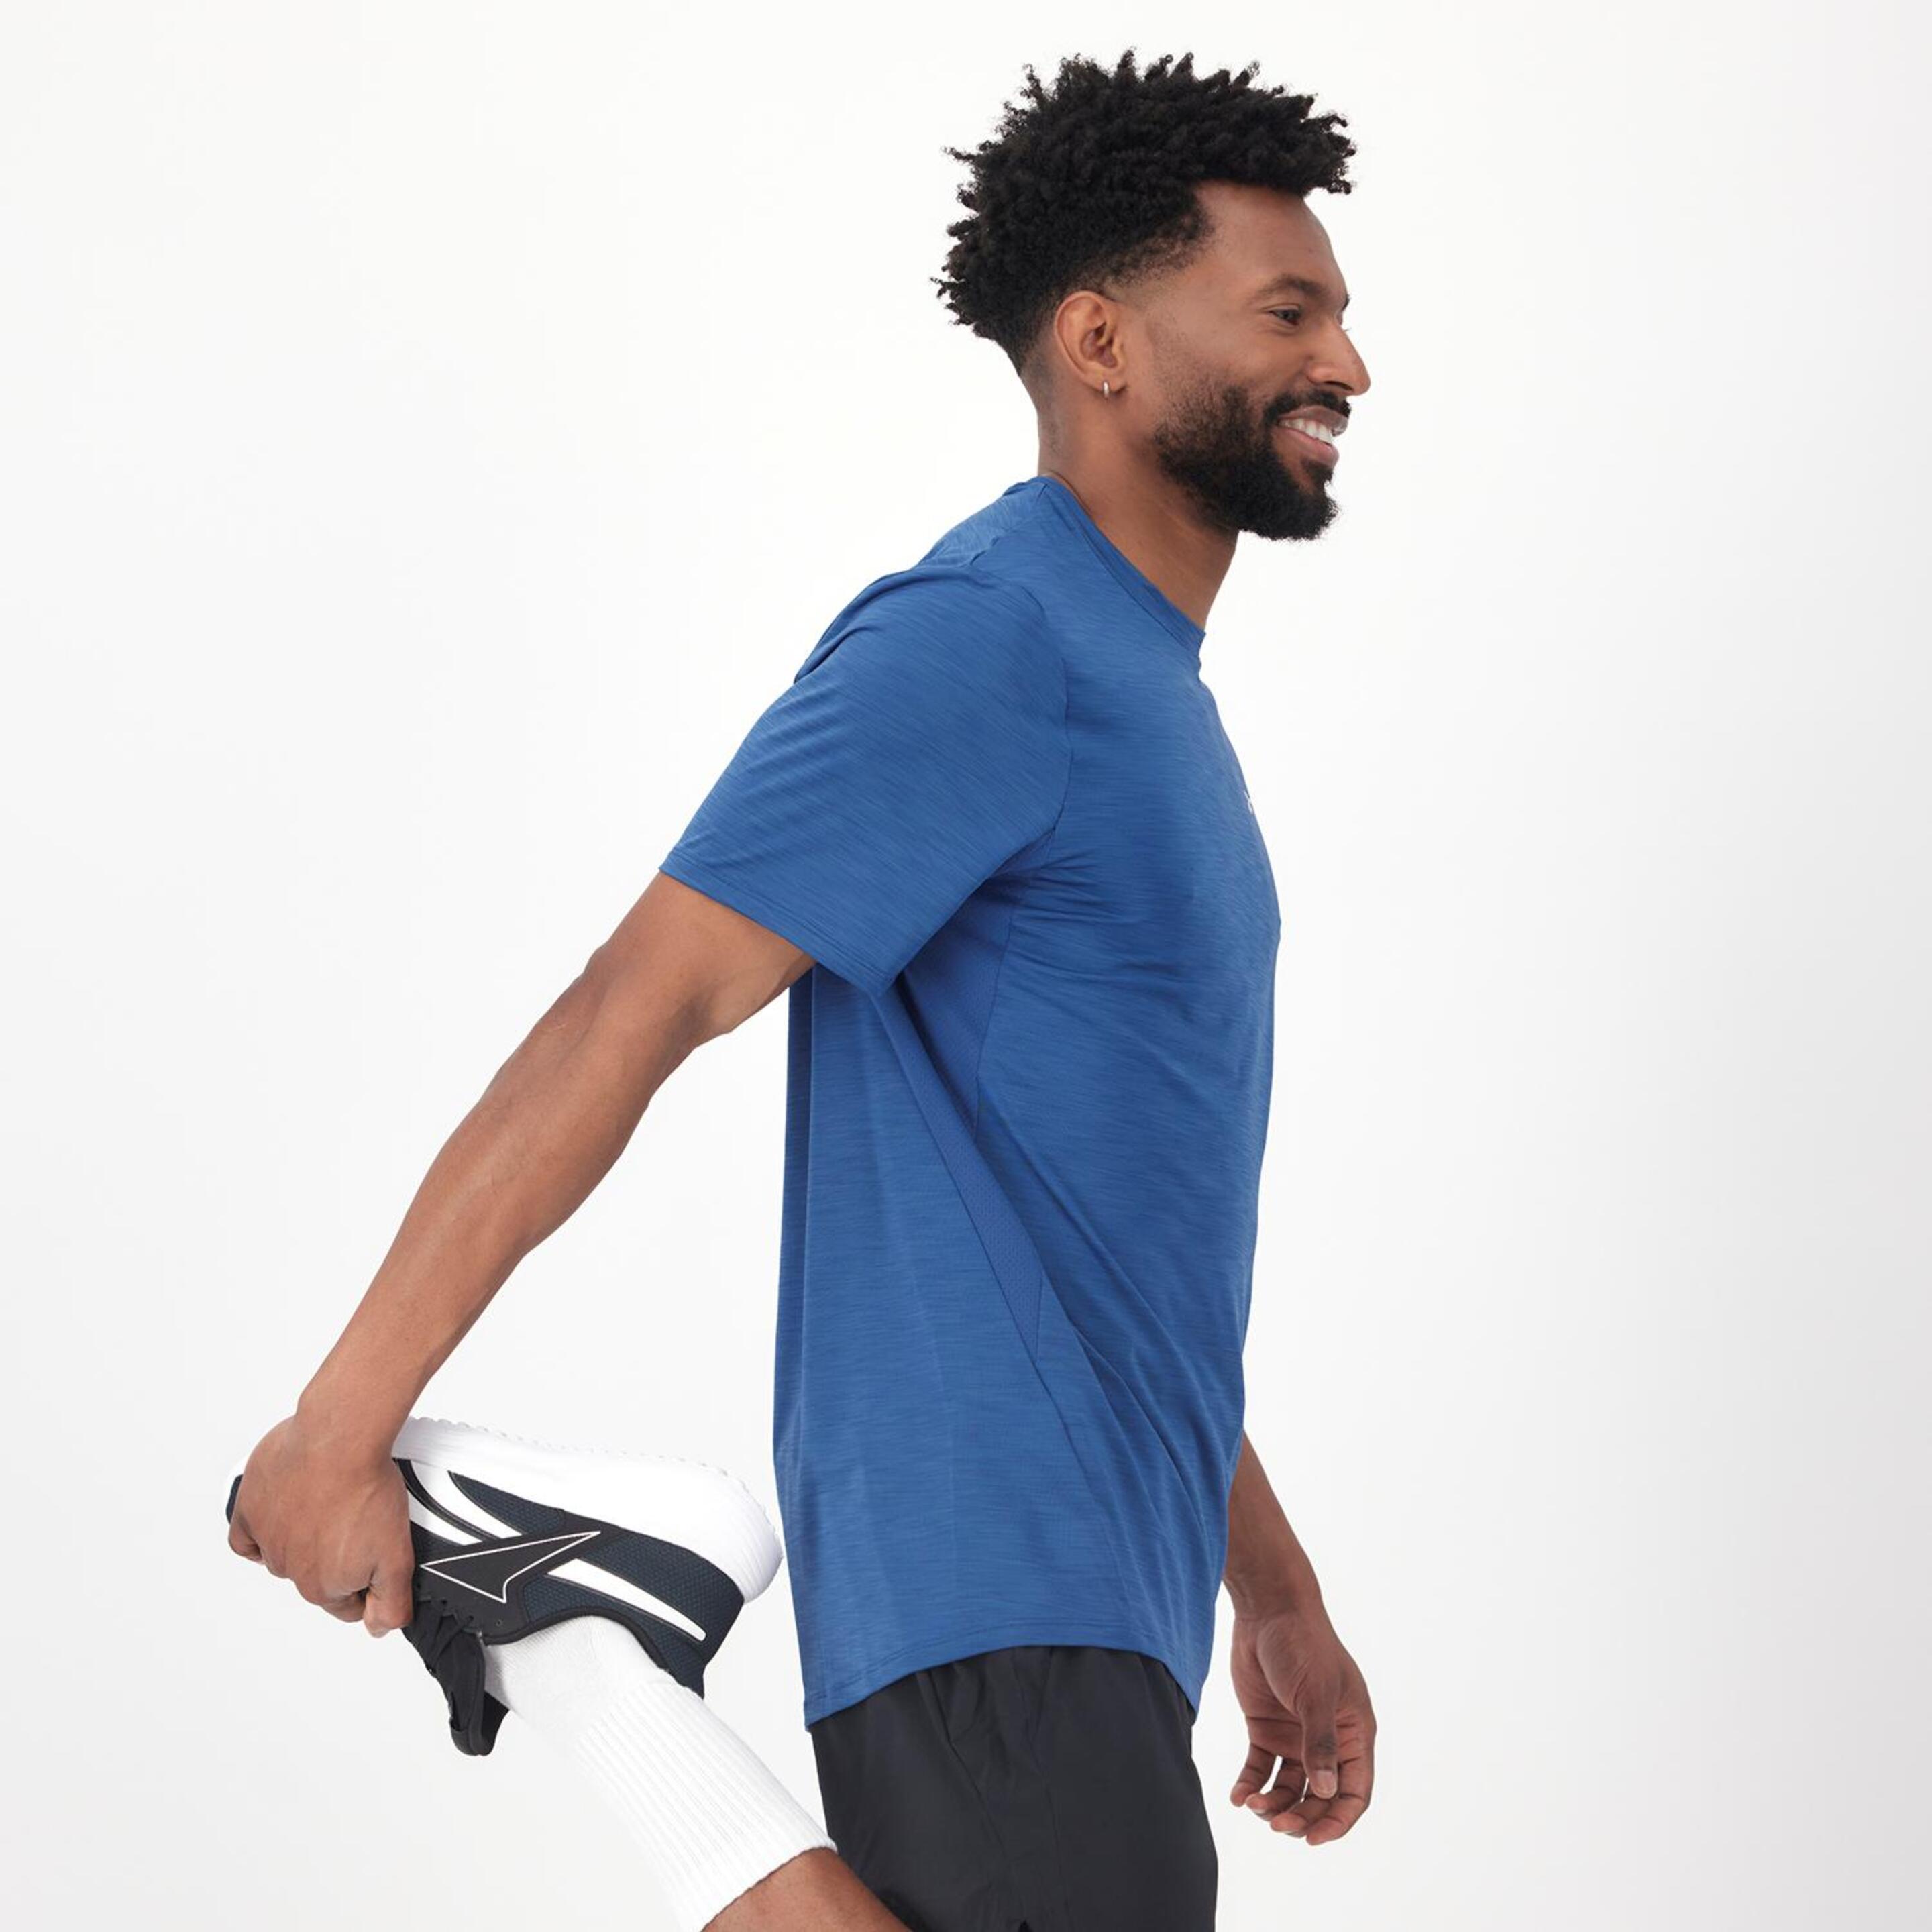 Reebok Athlete 2.0 Chill - Azul - Camiseta Running Hombre